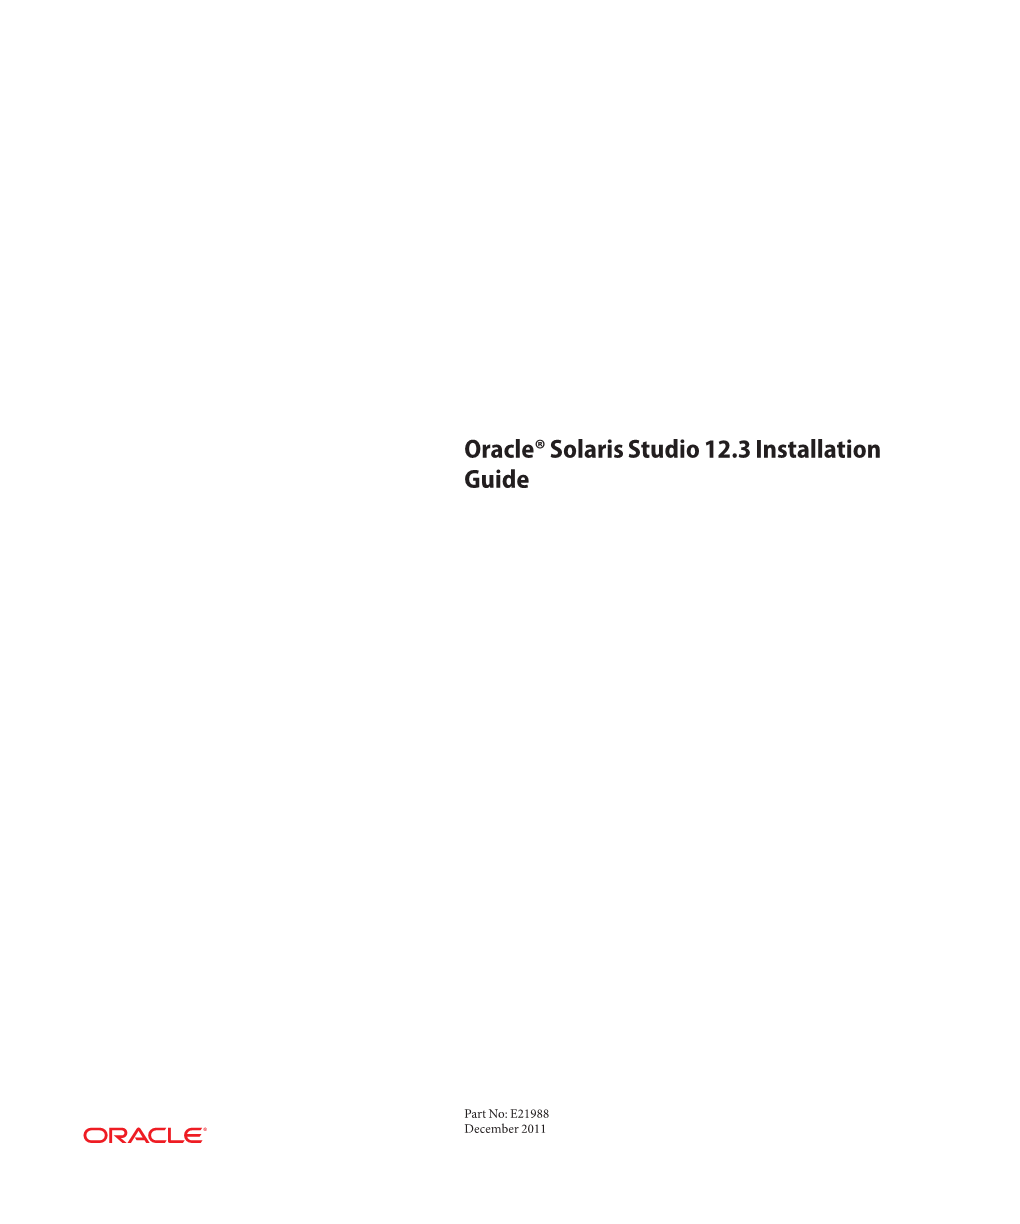 Oracle Solaris Studio 12.3 Installation Guide • December 2011 Contents